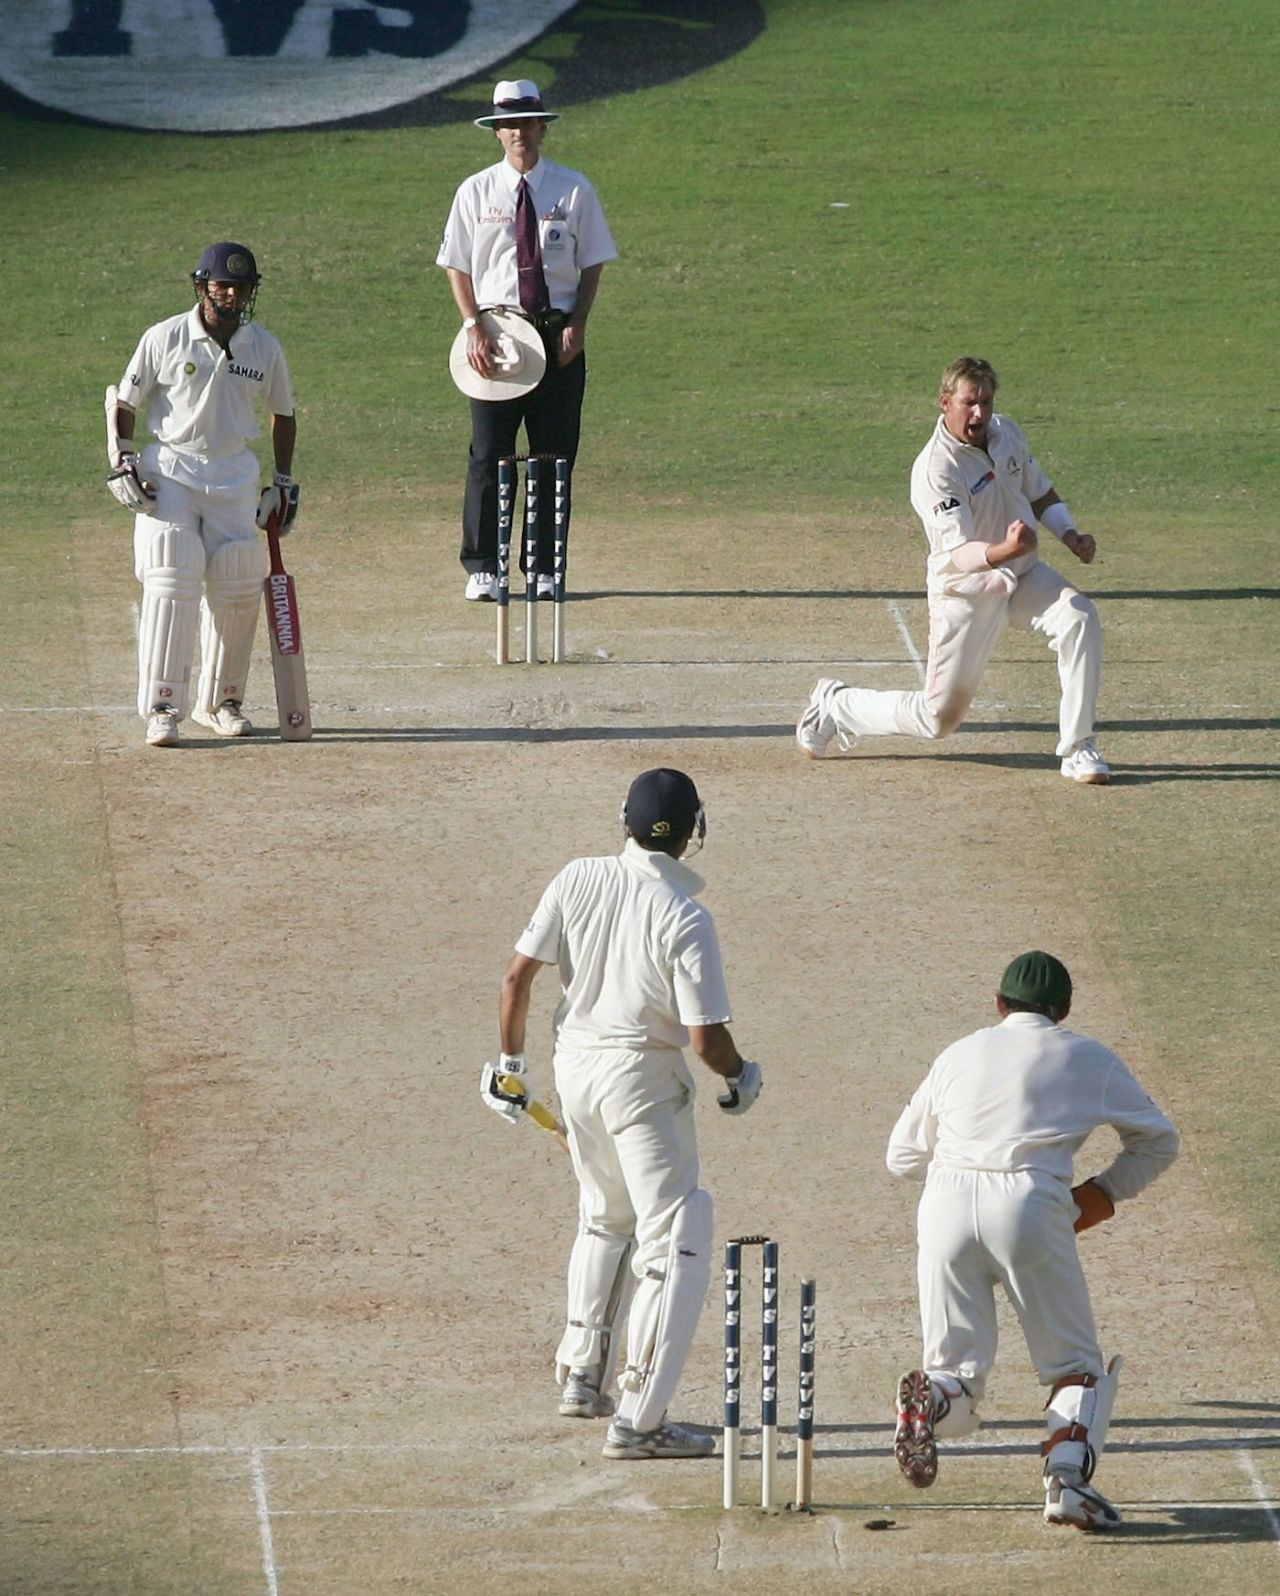 VVS Laxman bowled by Shane Warne, Australia v India, 1st Test, Bangalore, 2nd day, October 7, 2004